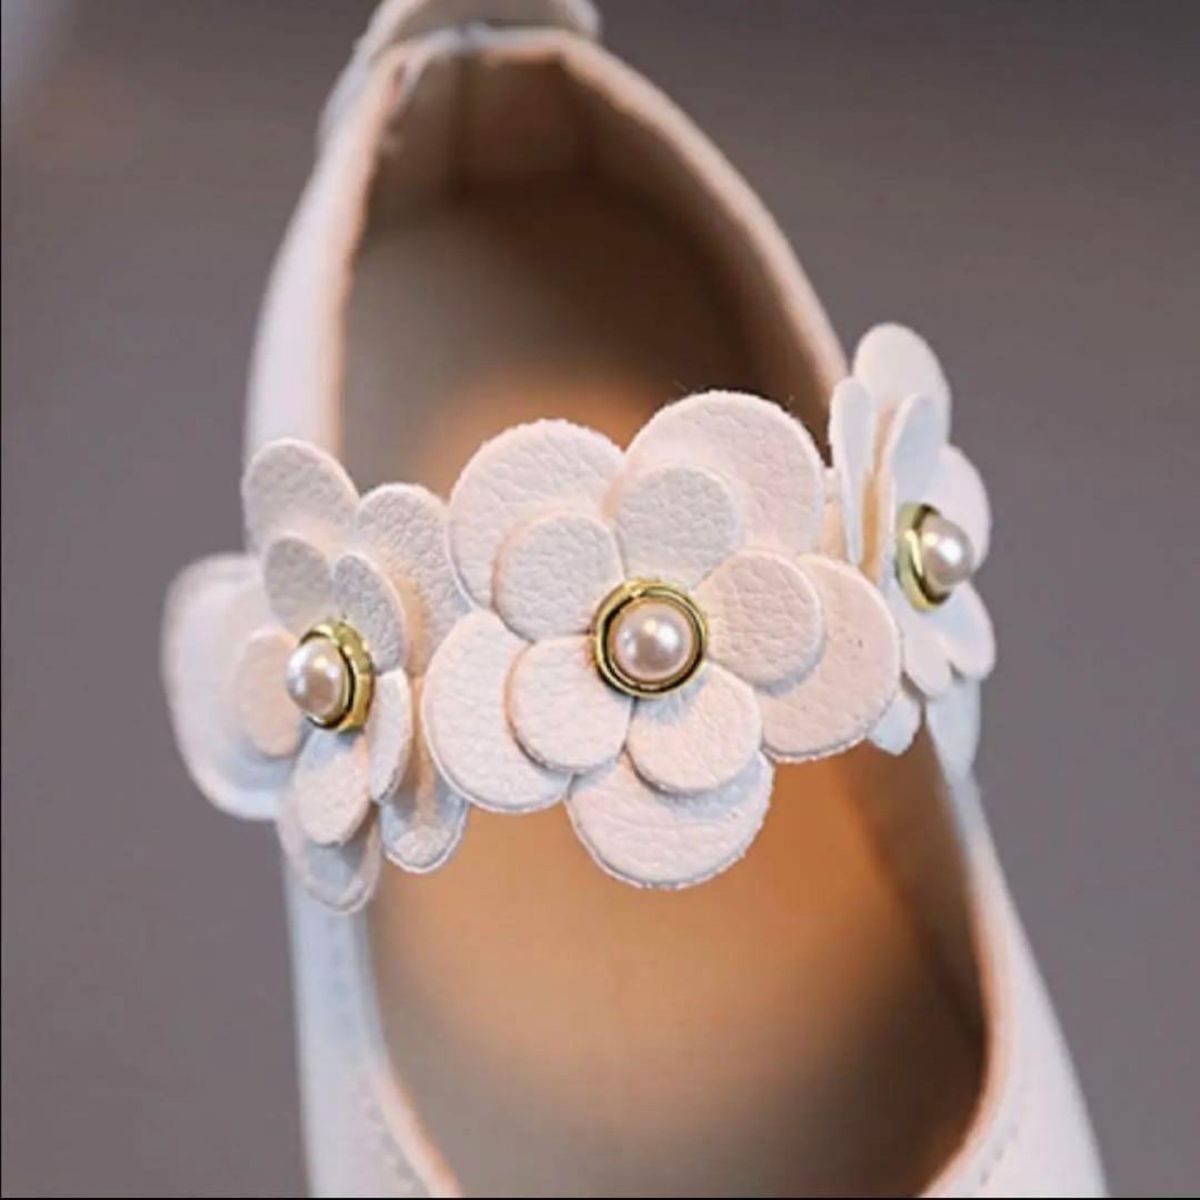 【20.5cm】フォーマルシューズ キッズ 白 靴 発表会 結婚式 七五三 お花